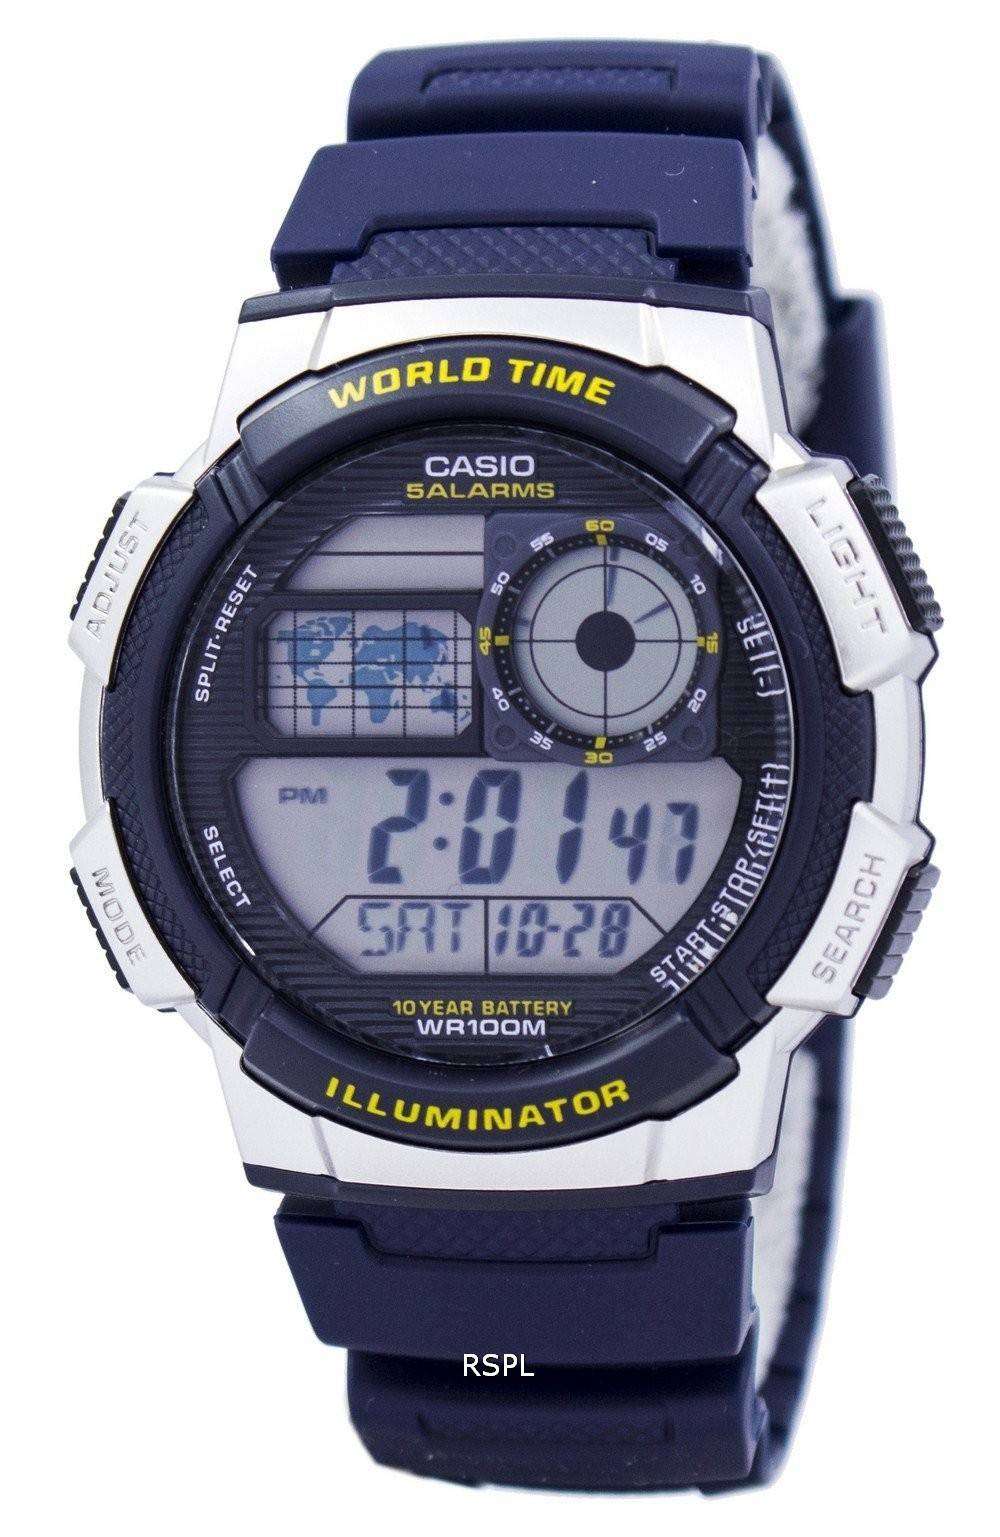 Casio Illuminator World Time Alarm AE-1000W-2AV Men's ...